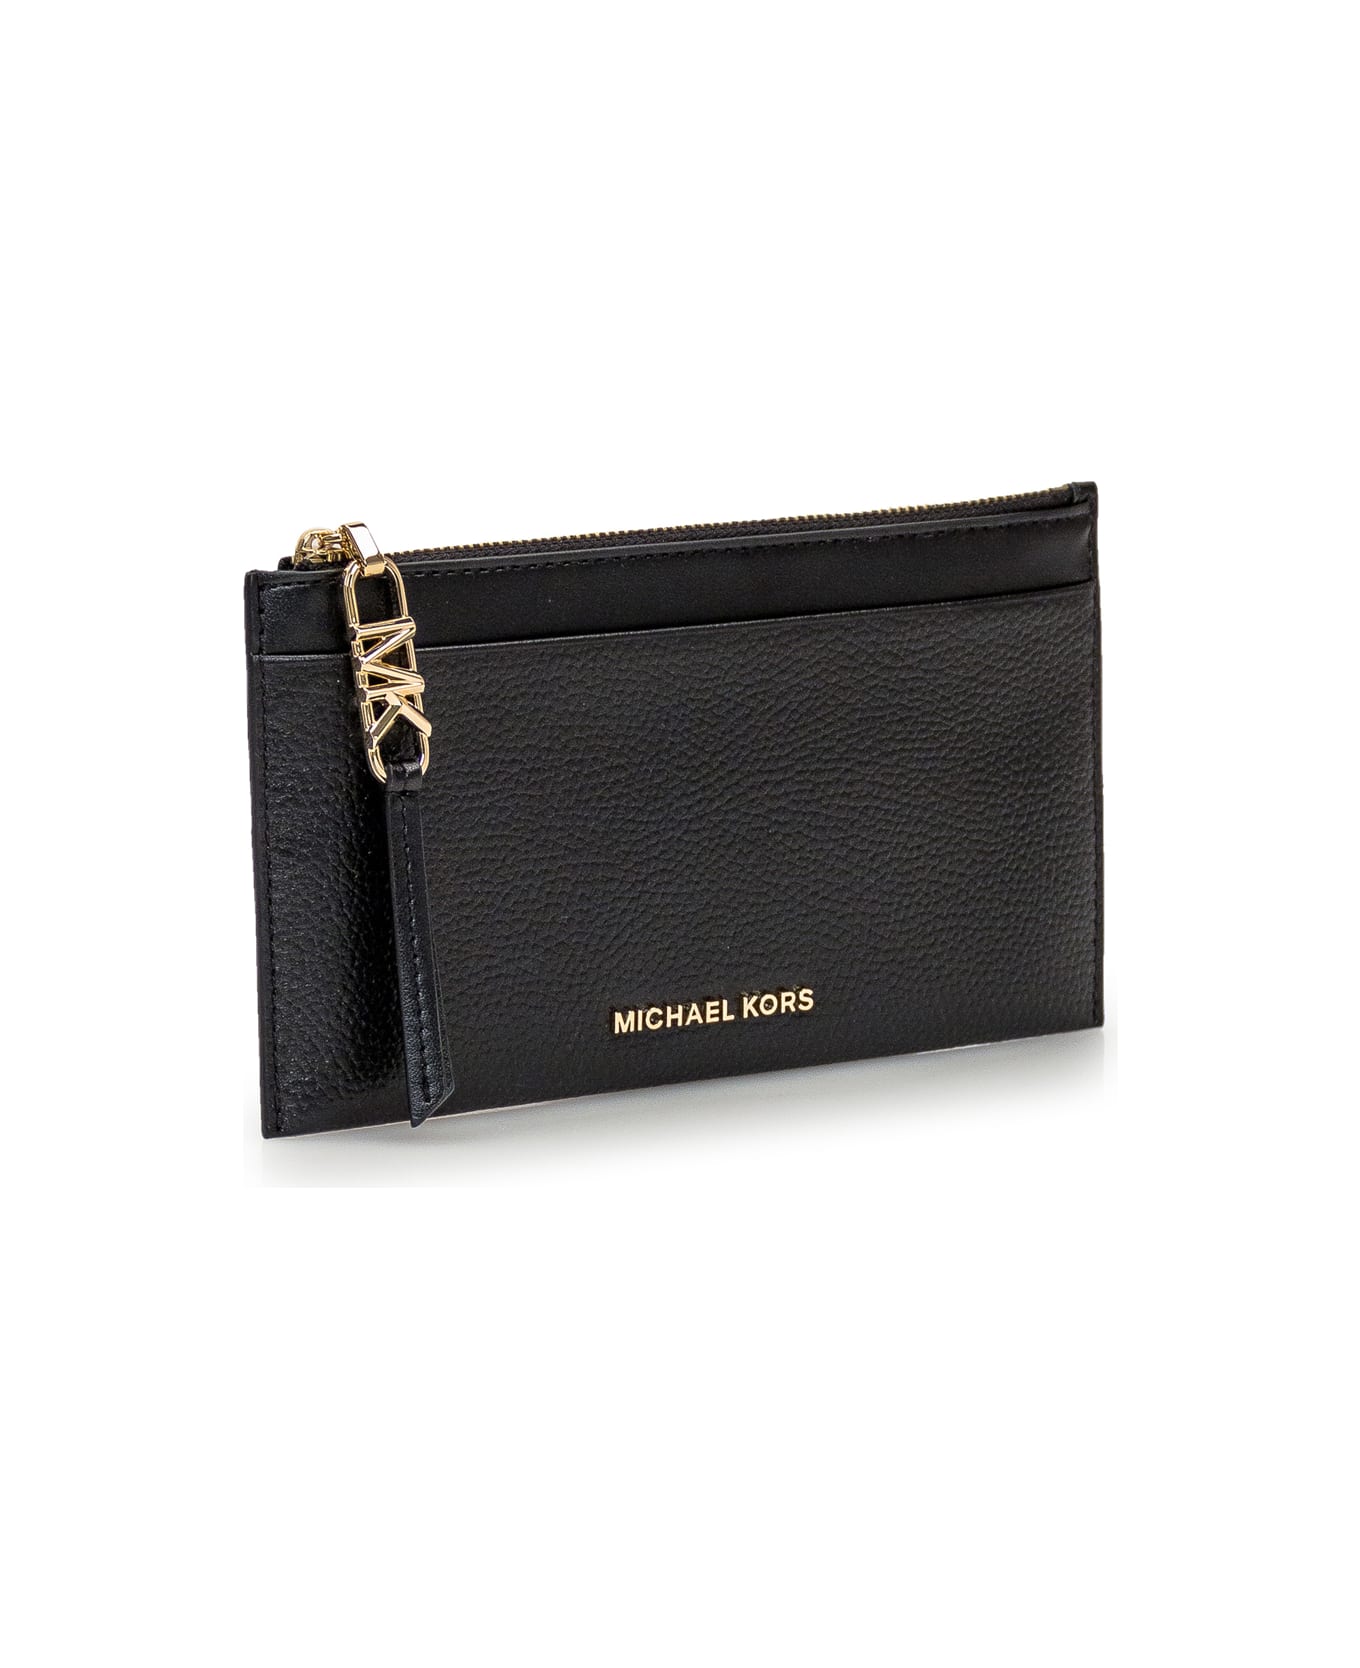 Michael Kors Collection Wallet - Black 財布